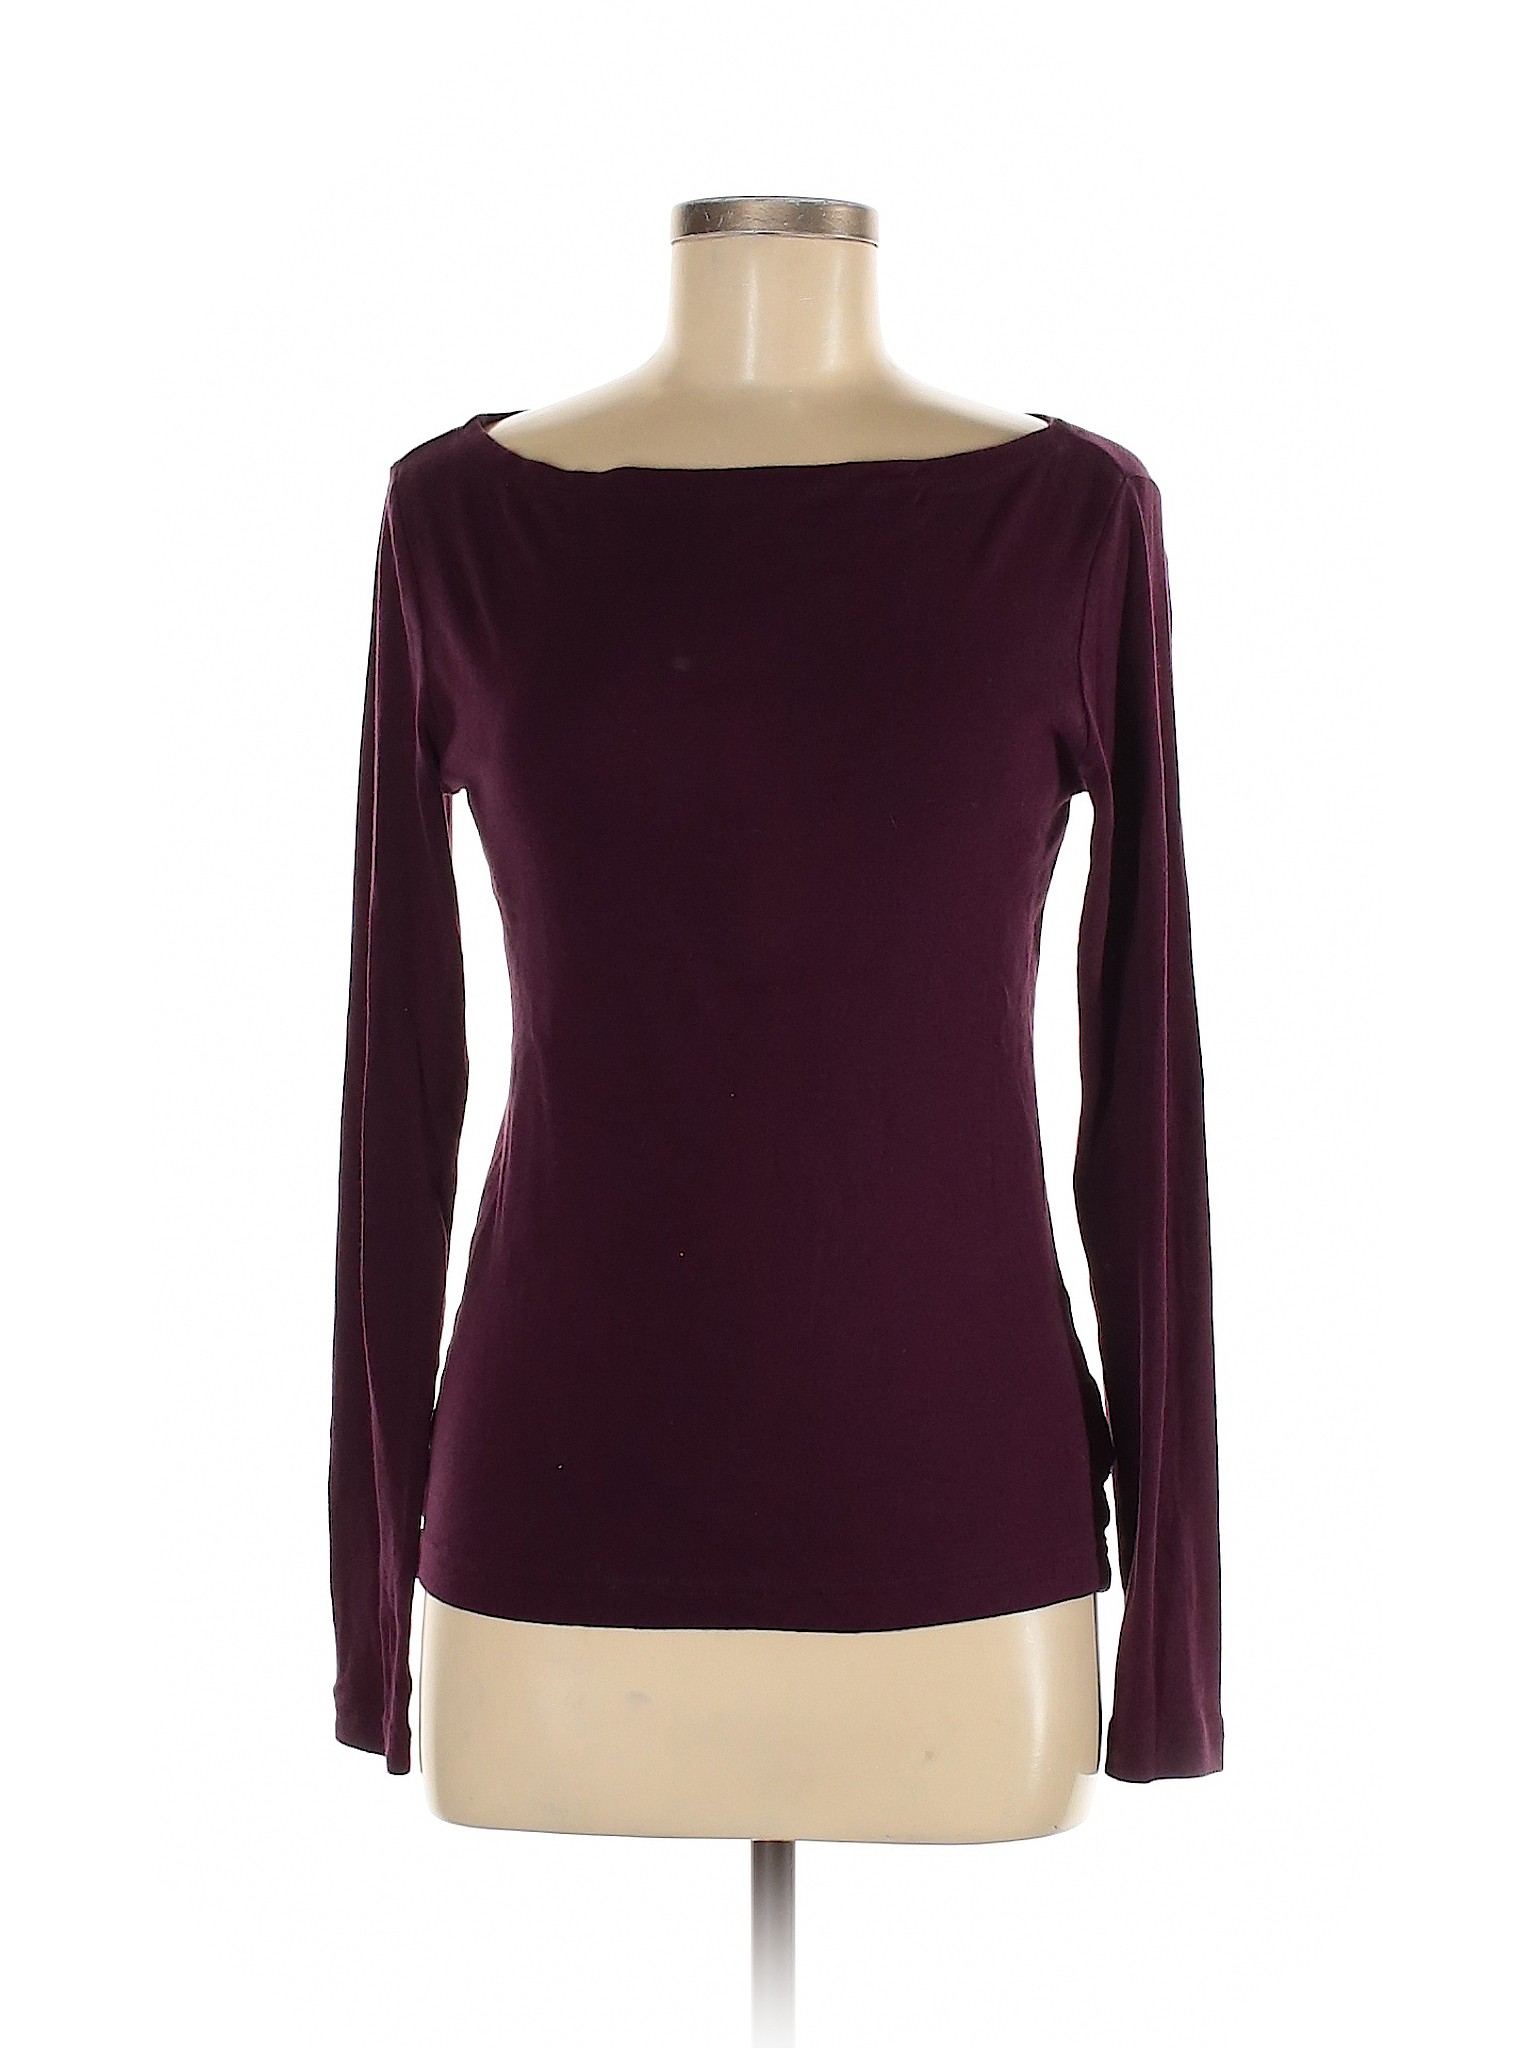 Gap Women Purple Long Sleeve T-Shirt M | eBay